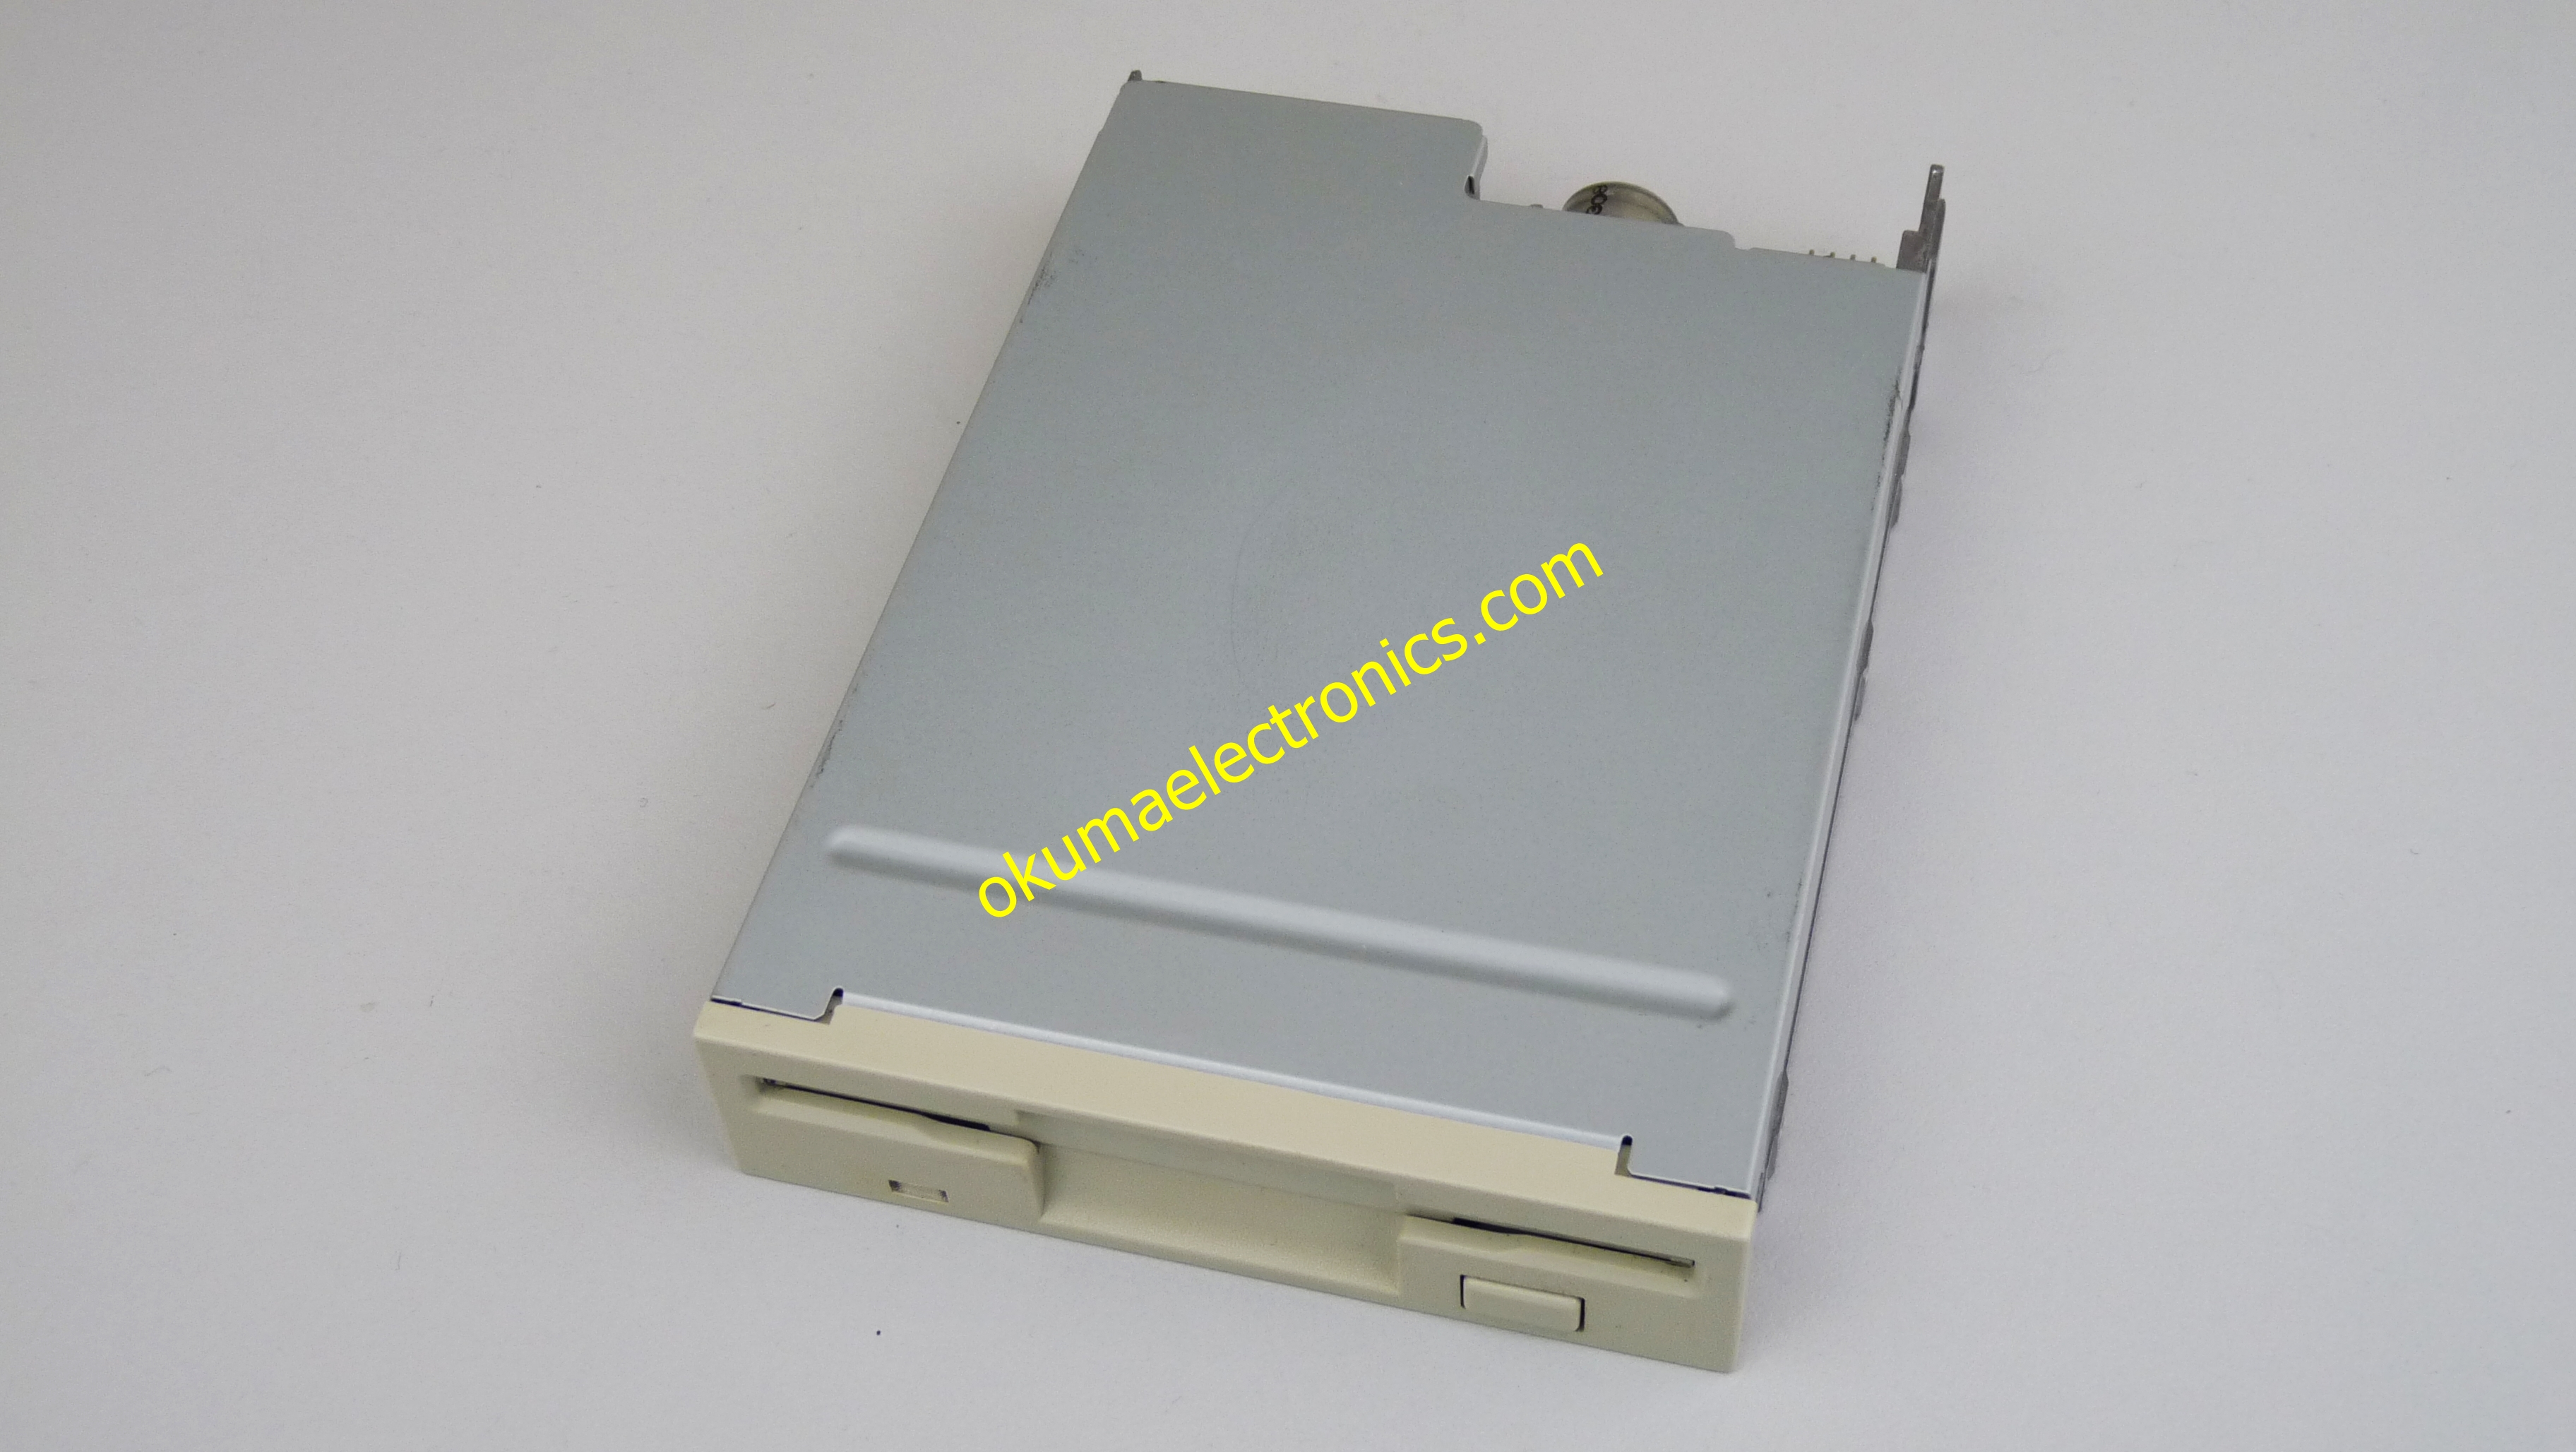 Okuma Control Board Model OKFDD-7UE floppy disk drive